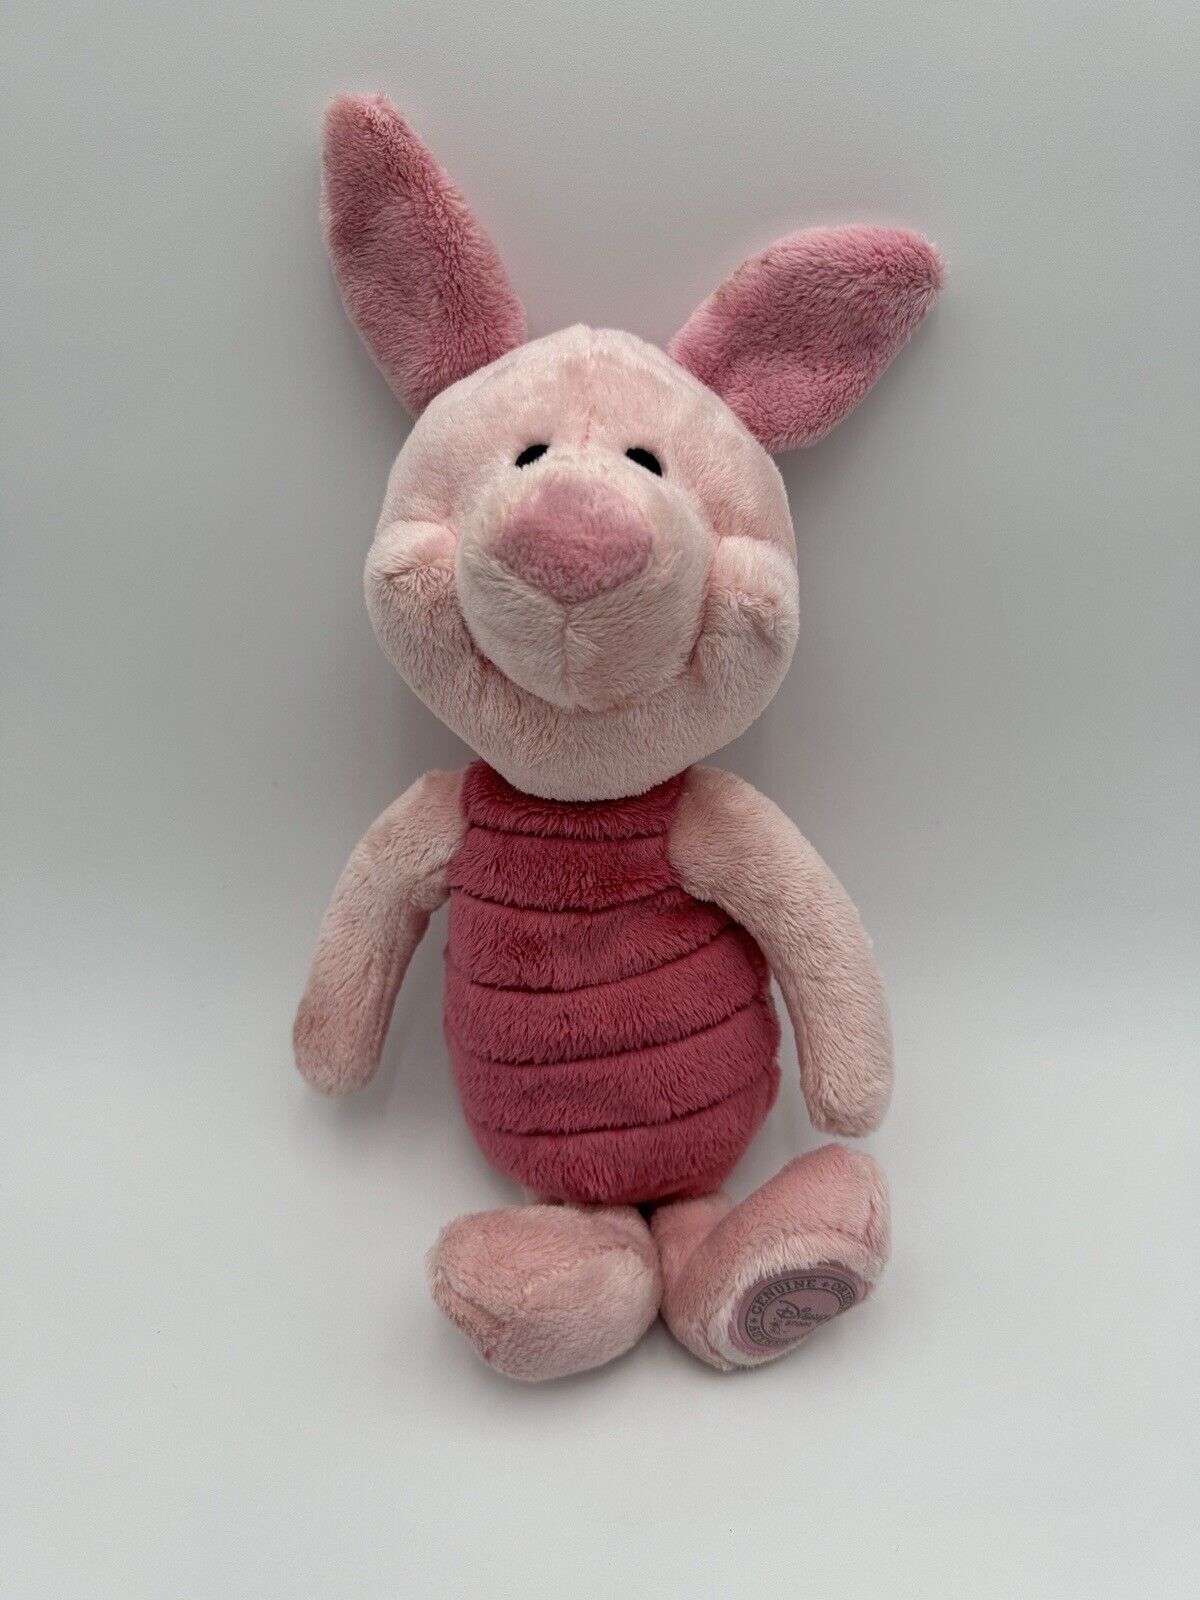 Piglet Plush Disney Store - 17” Large Plush Winnie the Pooh Character